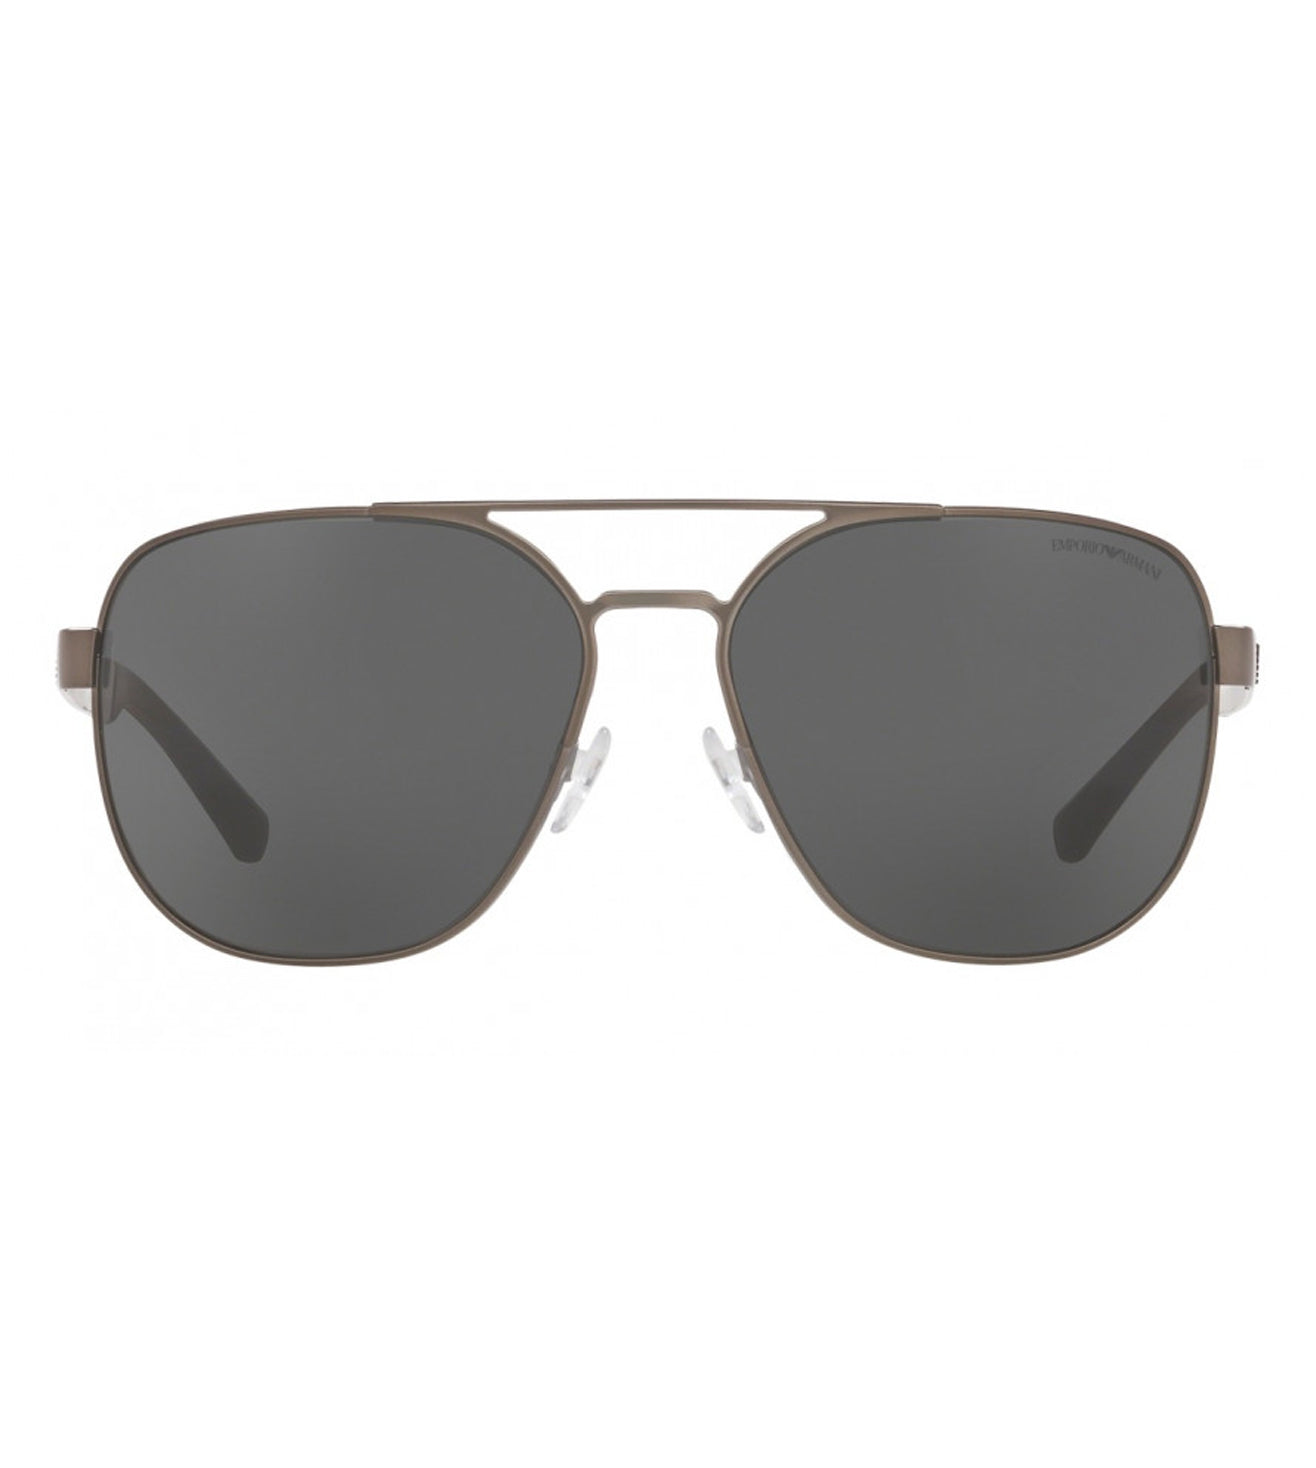 Aviator Matte Grey And Grey Lens Sunglasses